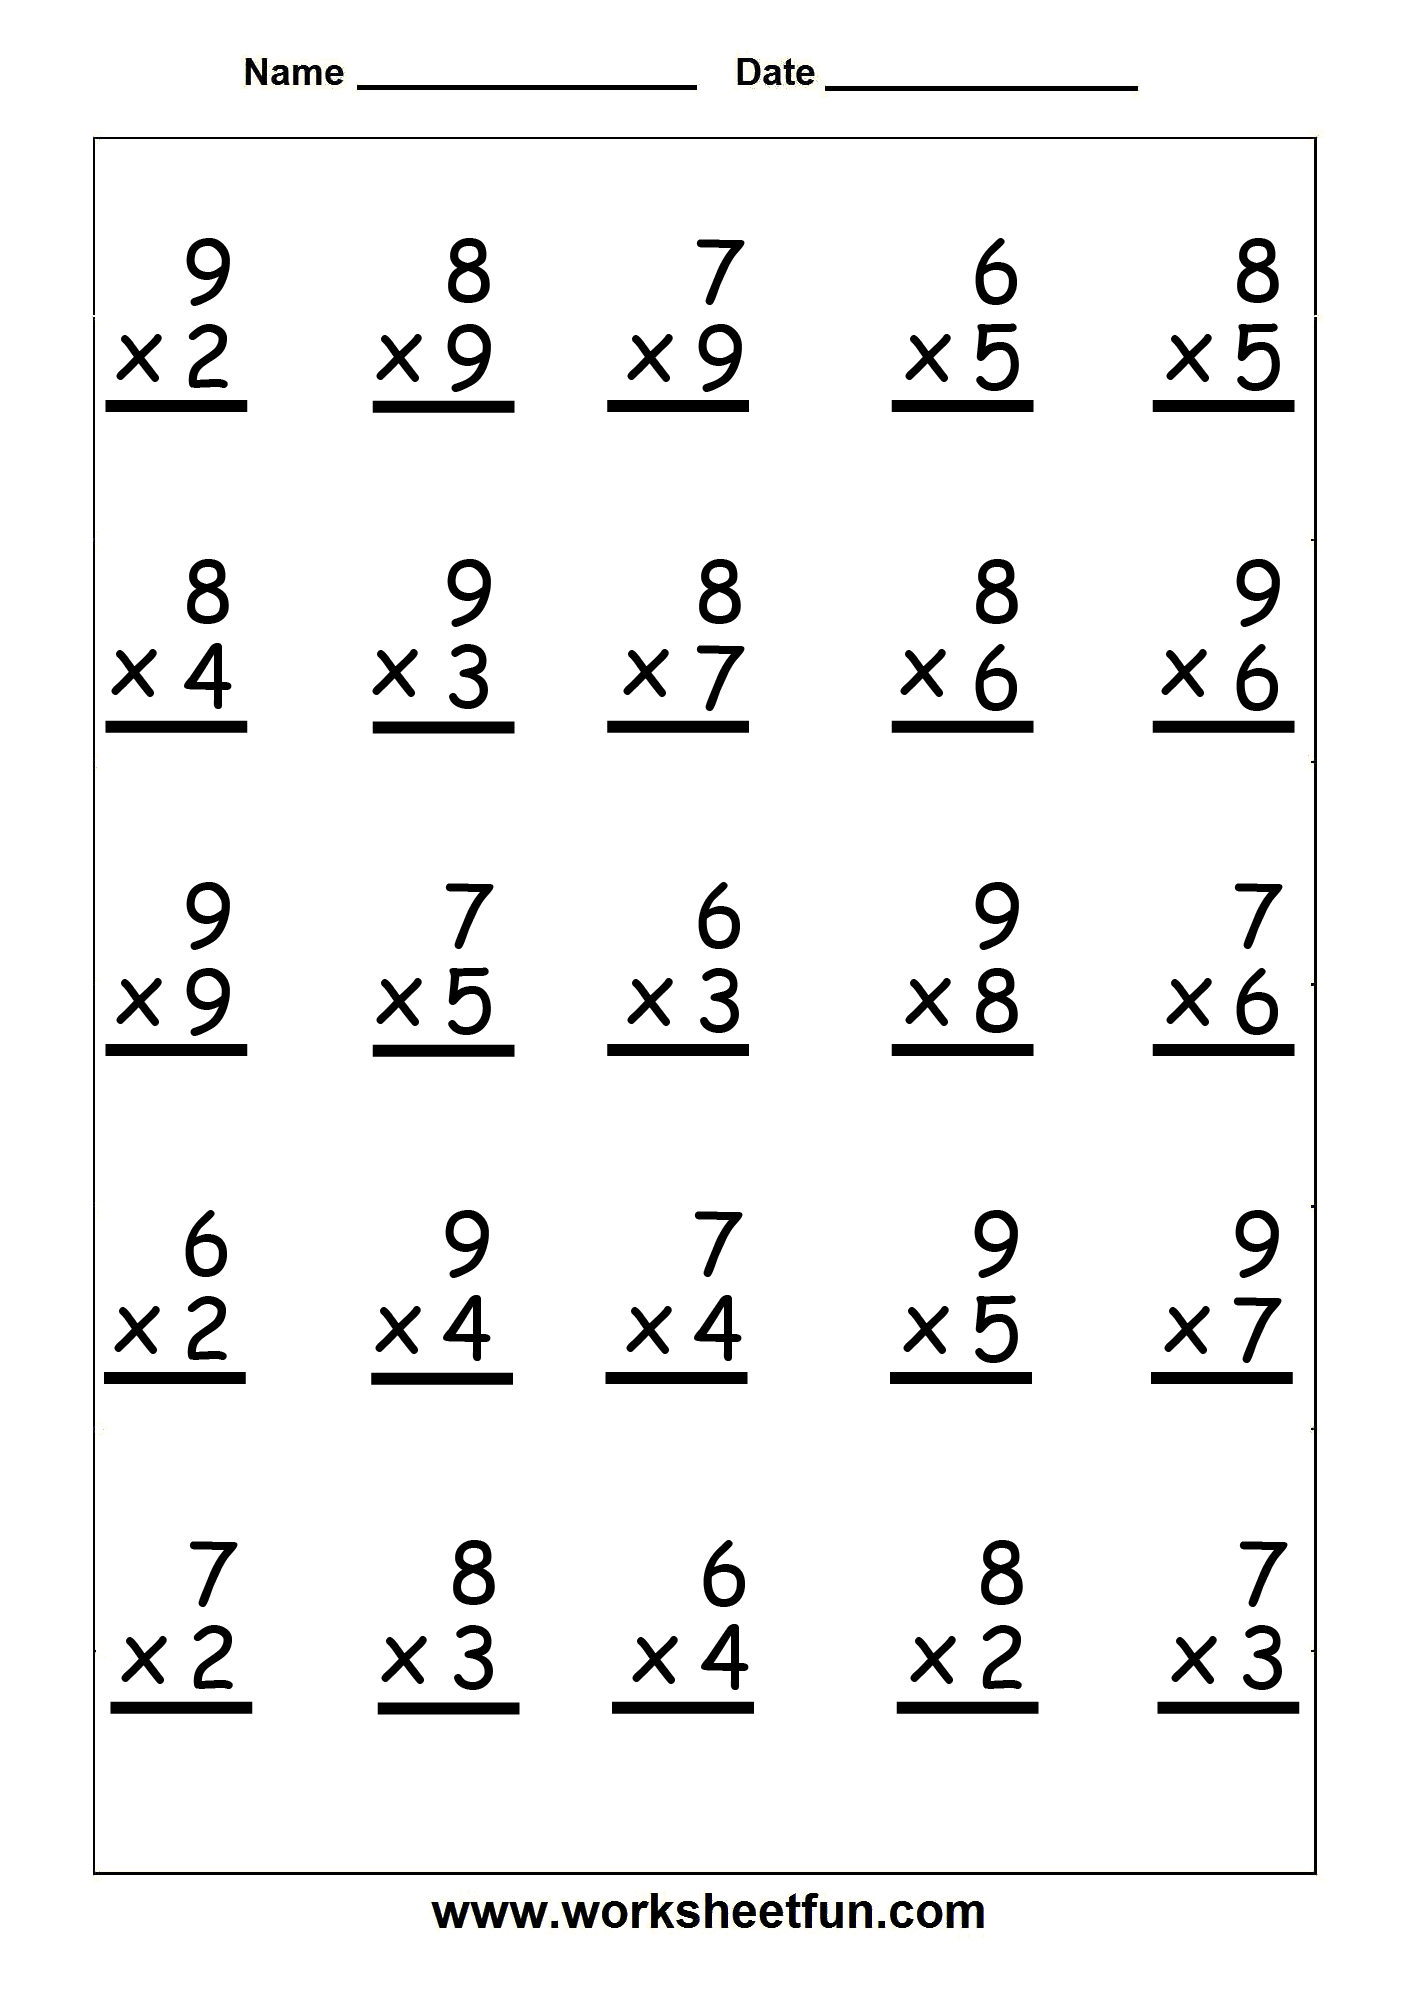  12 Best Images Of 12 Times Tables Practice Worksheet Multiplication Worksheets 5 Times Table 